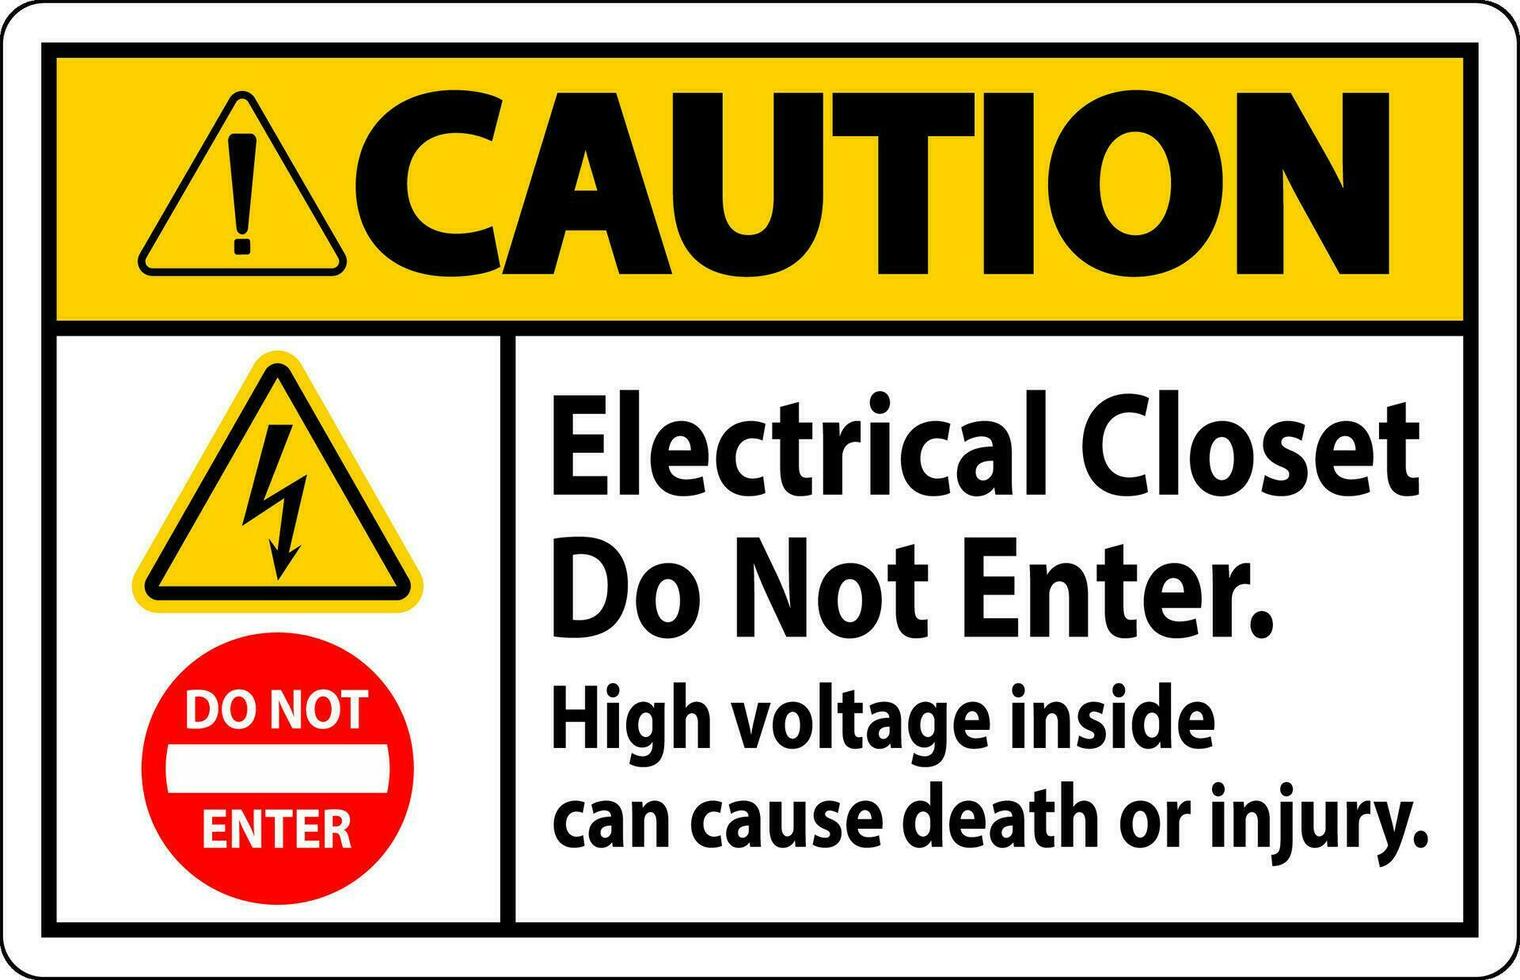 precaución firmar eléctrico armario - hacer no ingresar. alto voltaje dentro lata porque muerte o lesión vector